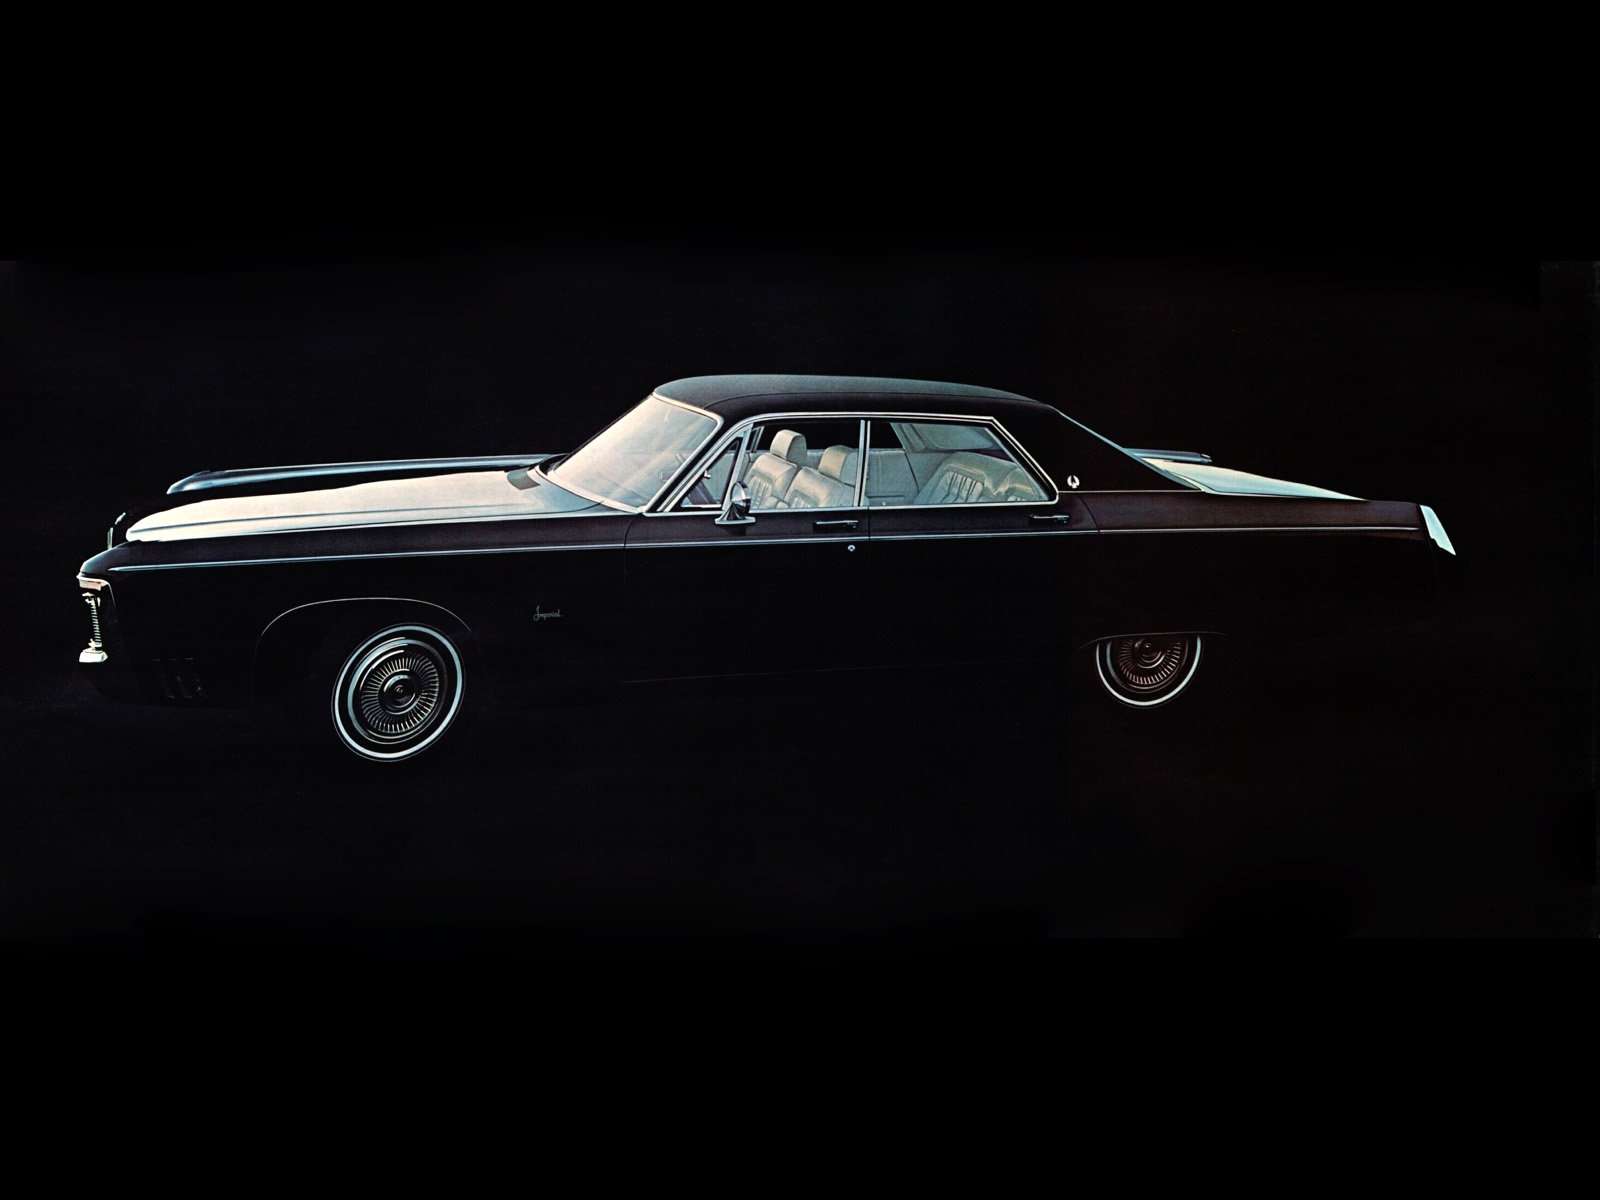 1969, Chrysler, Imperial, Lebaron, 4 door, Hardtop,  ey hym43 , Classic Wallpaper